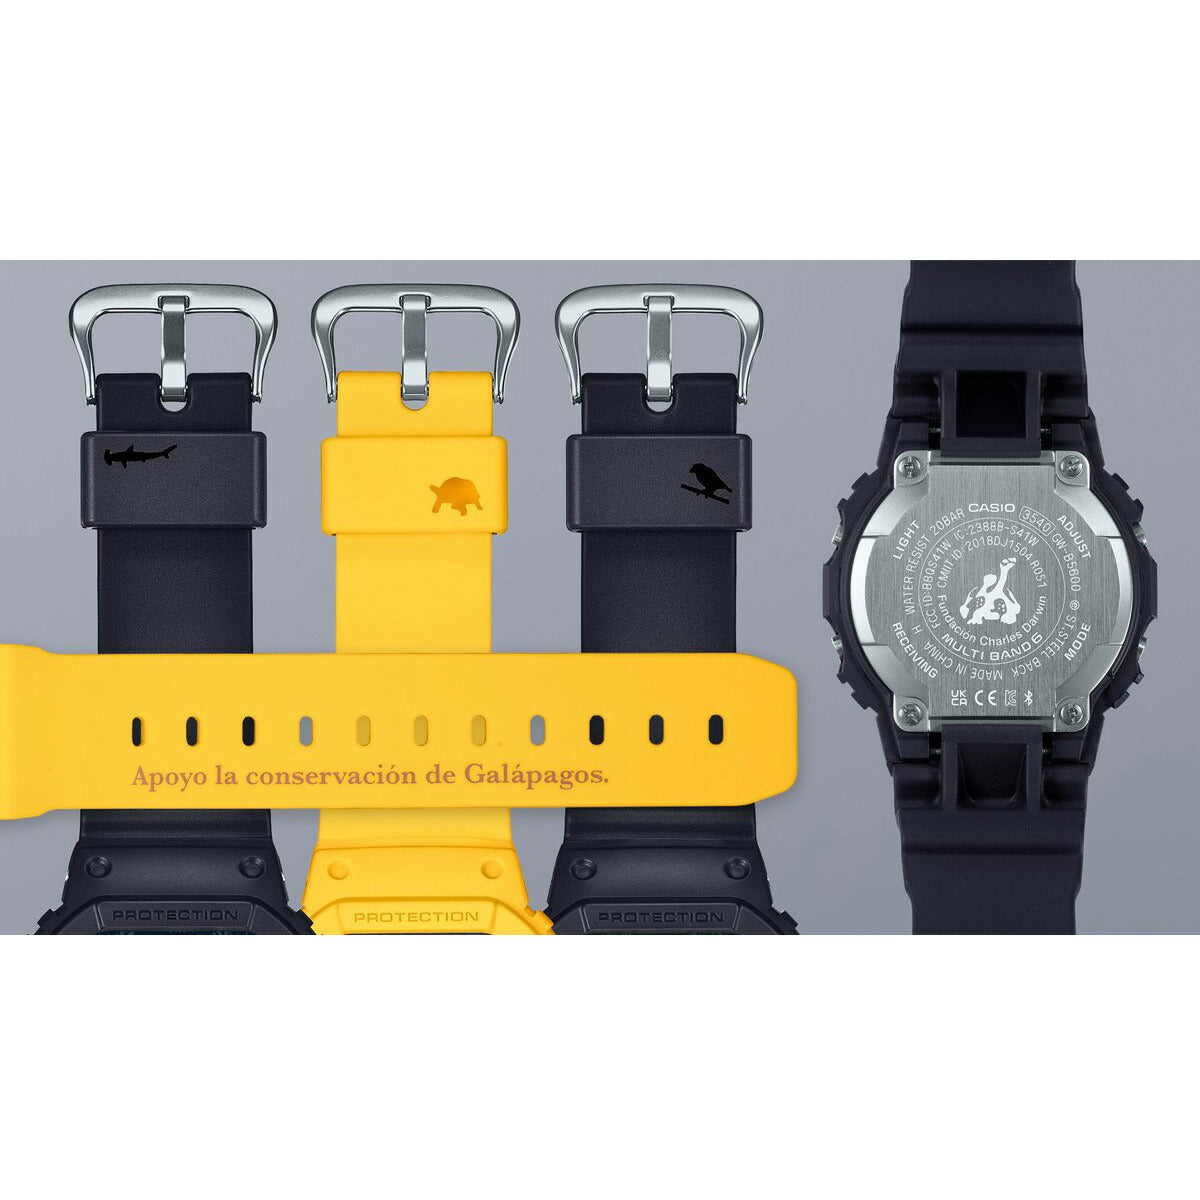 G-SHOCK 電波 ソーラー 電波時計 カシオ Gショック CASIO デジタル 腕時計 メンズ GW-B5600CD-9JR  チャールズ・ダーウィン財団 コラボモデル ガラパゴスゾウガメ